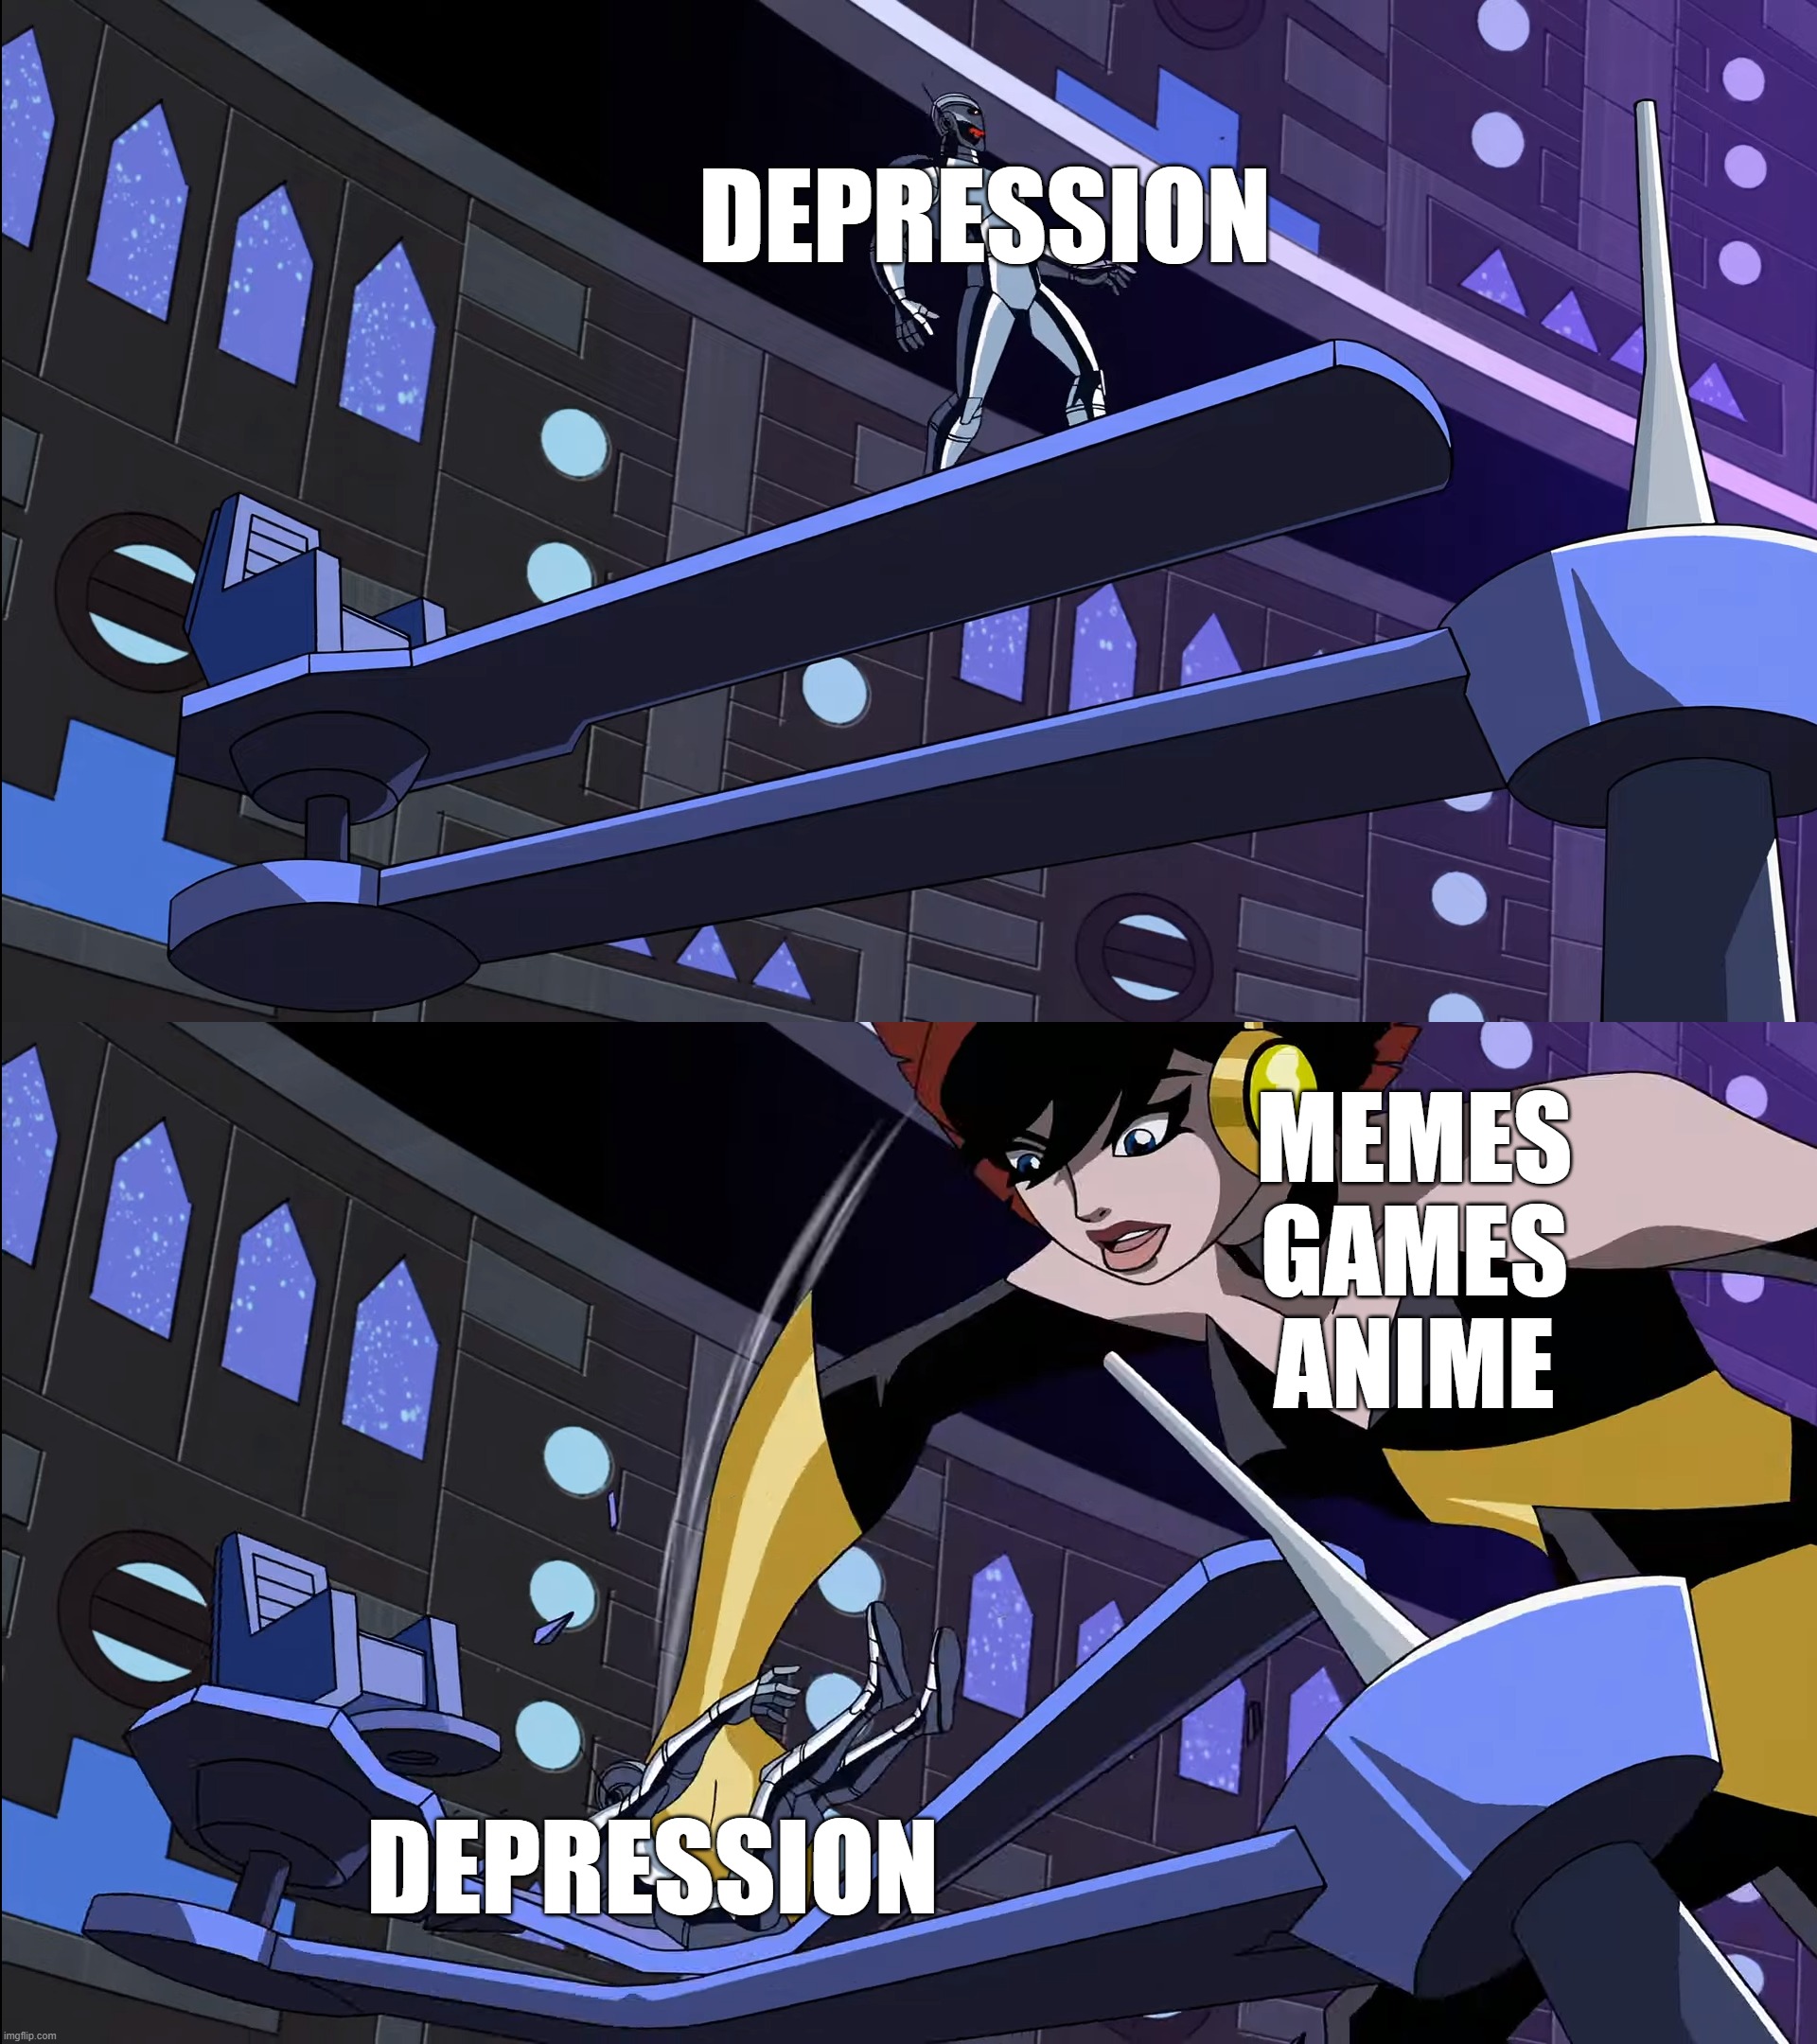 screw depression | DEPRESSION; MEMES
GAMES
ANIME; DEPRESSION | image tagged in depression | made w/ Imgflip meme maker